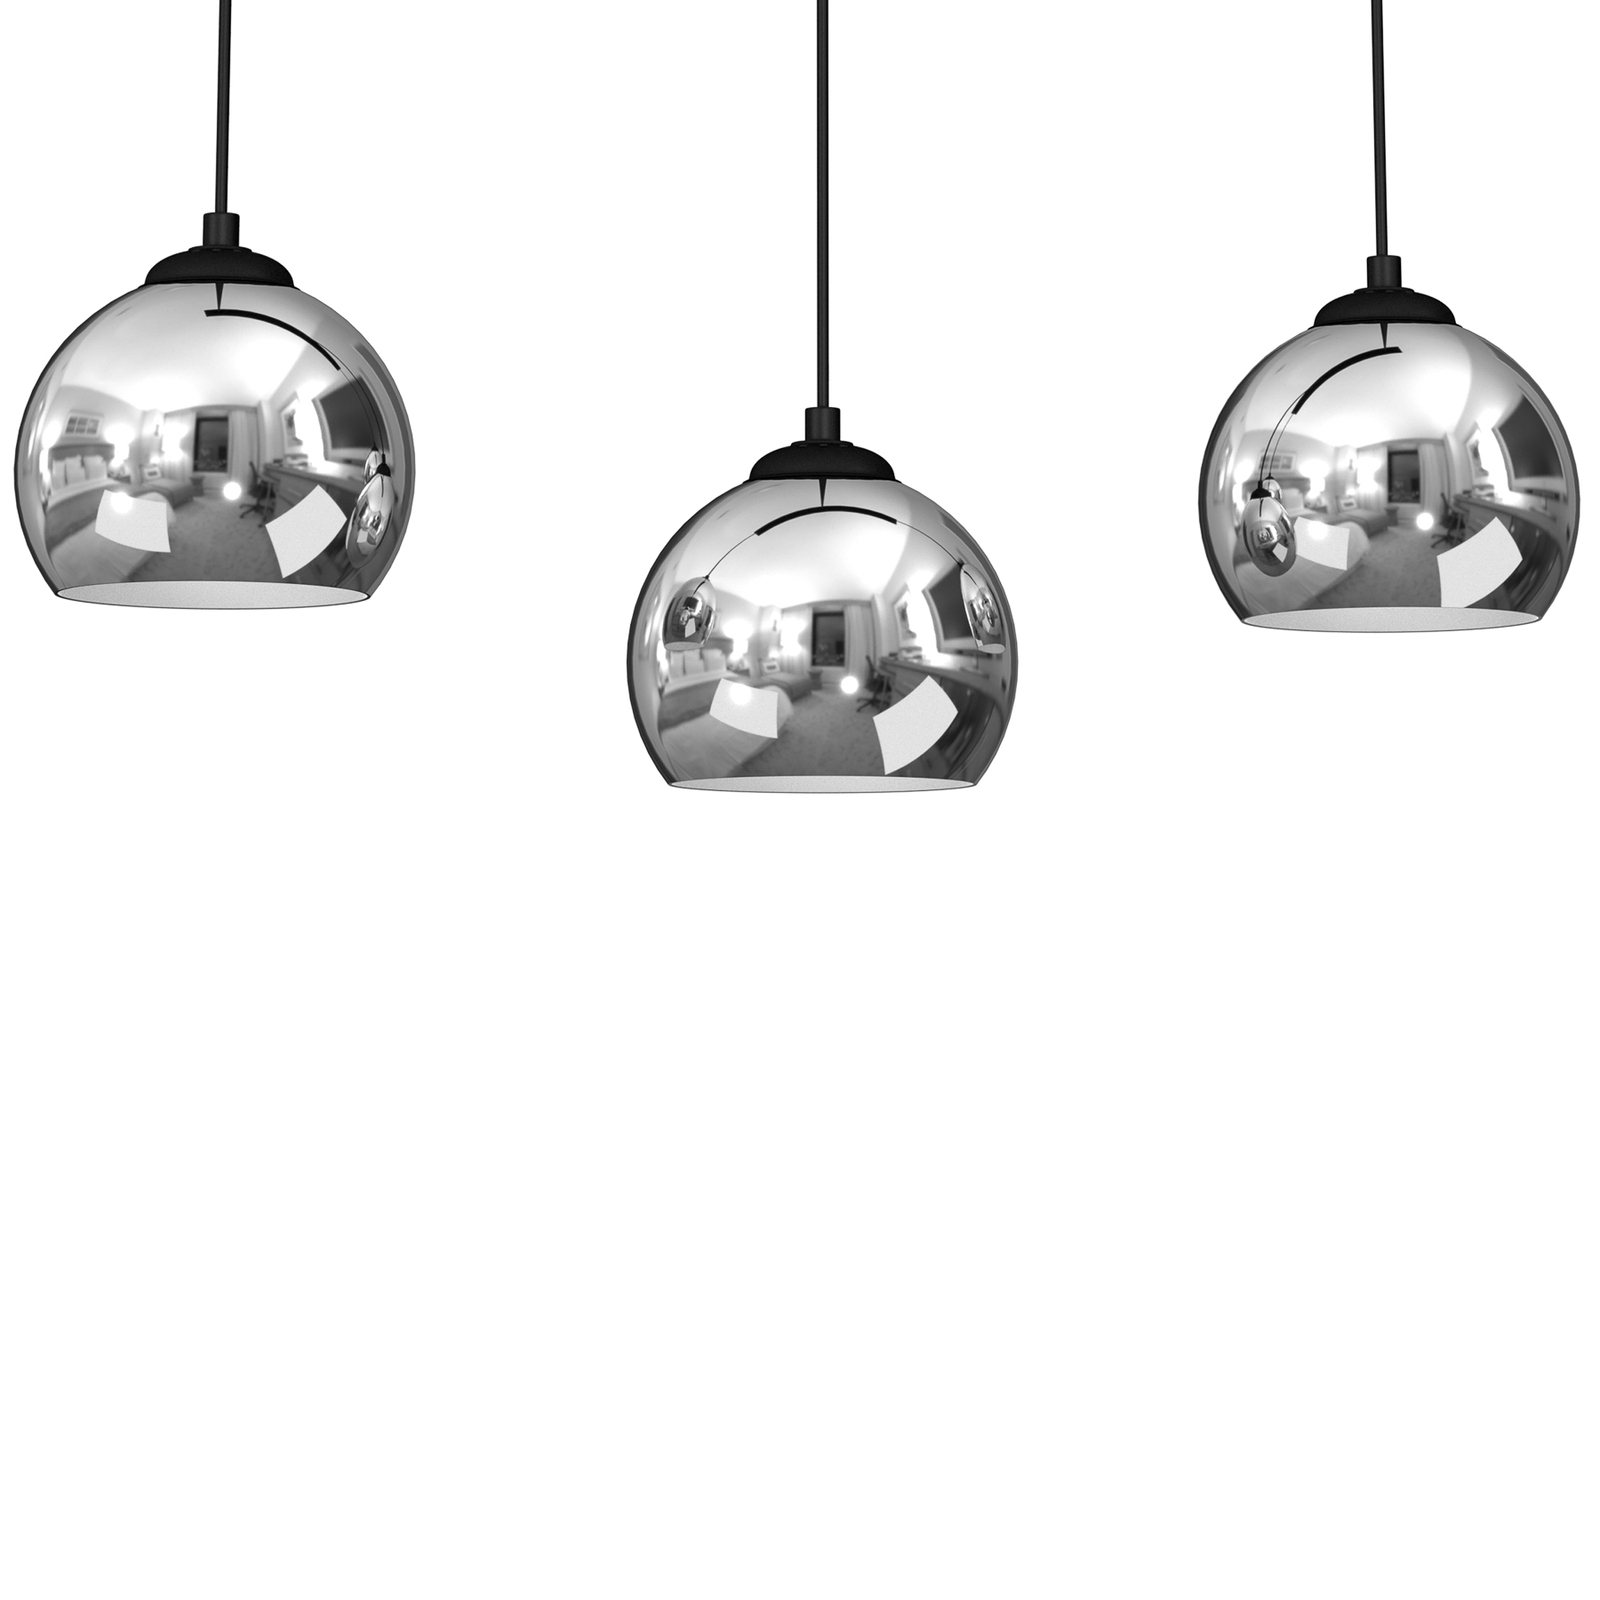 Tory hanging light black/chrome 3-bulb